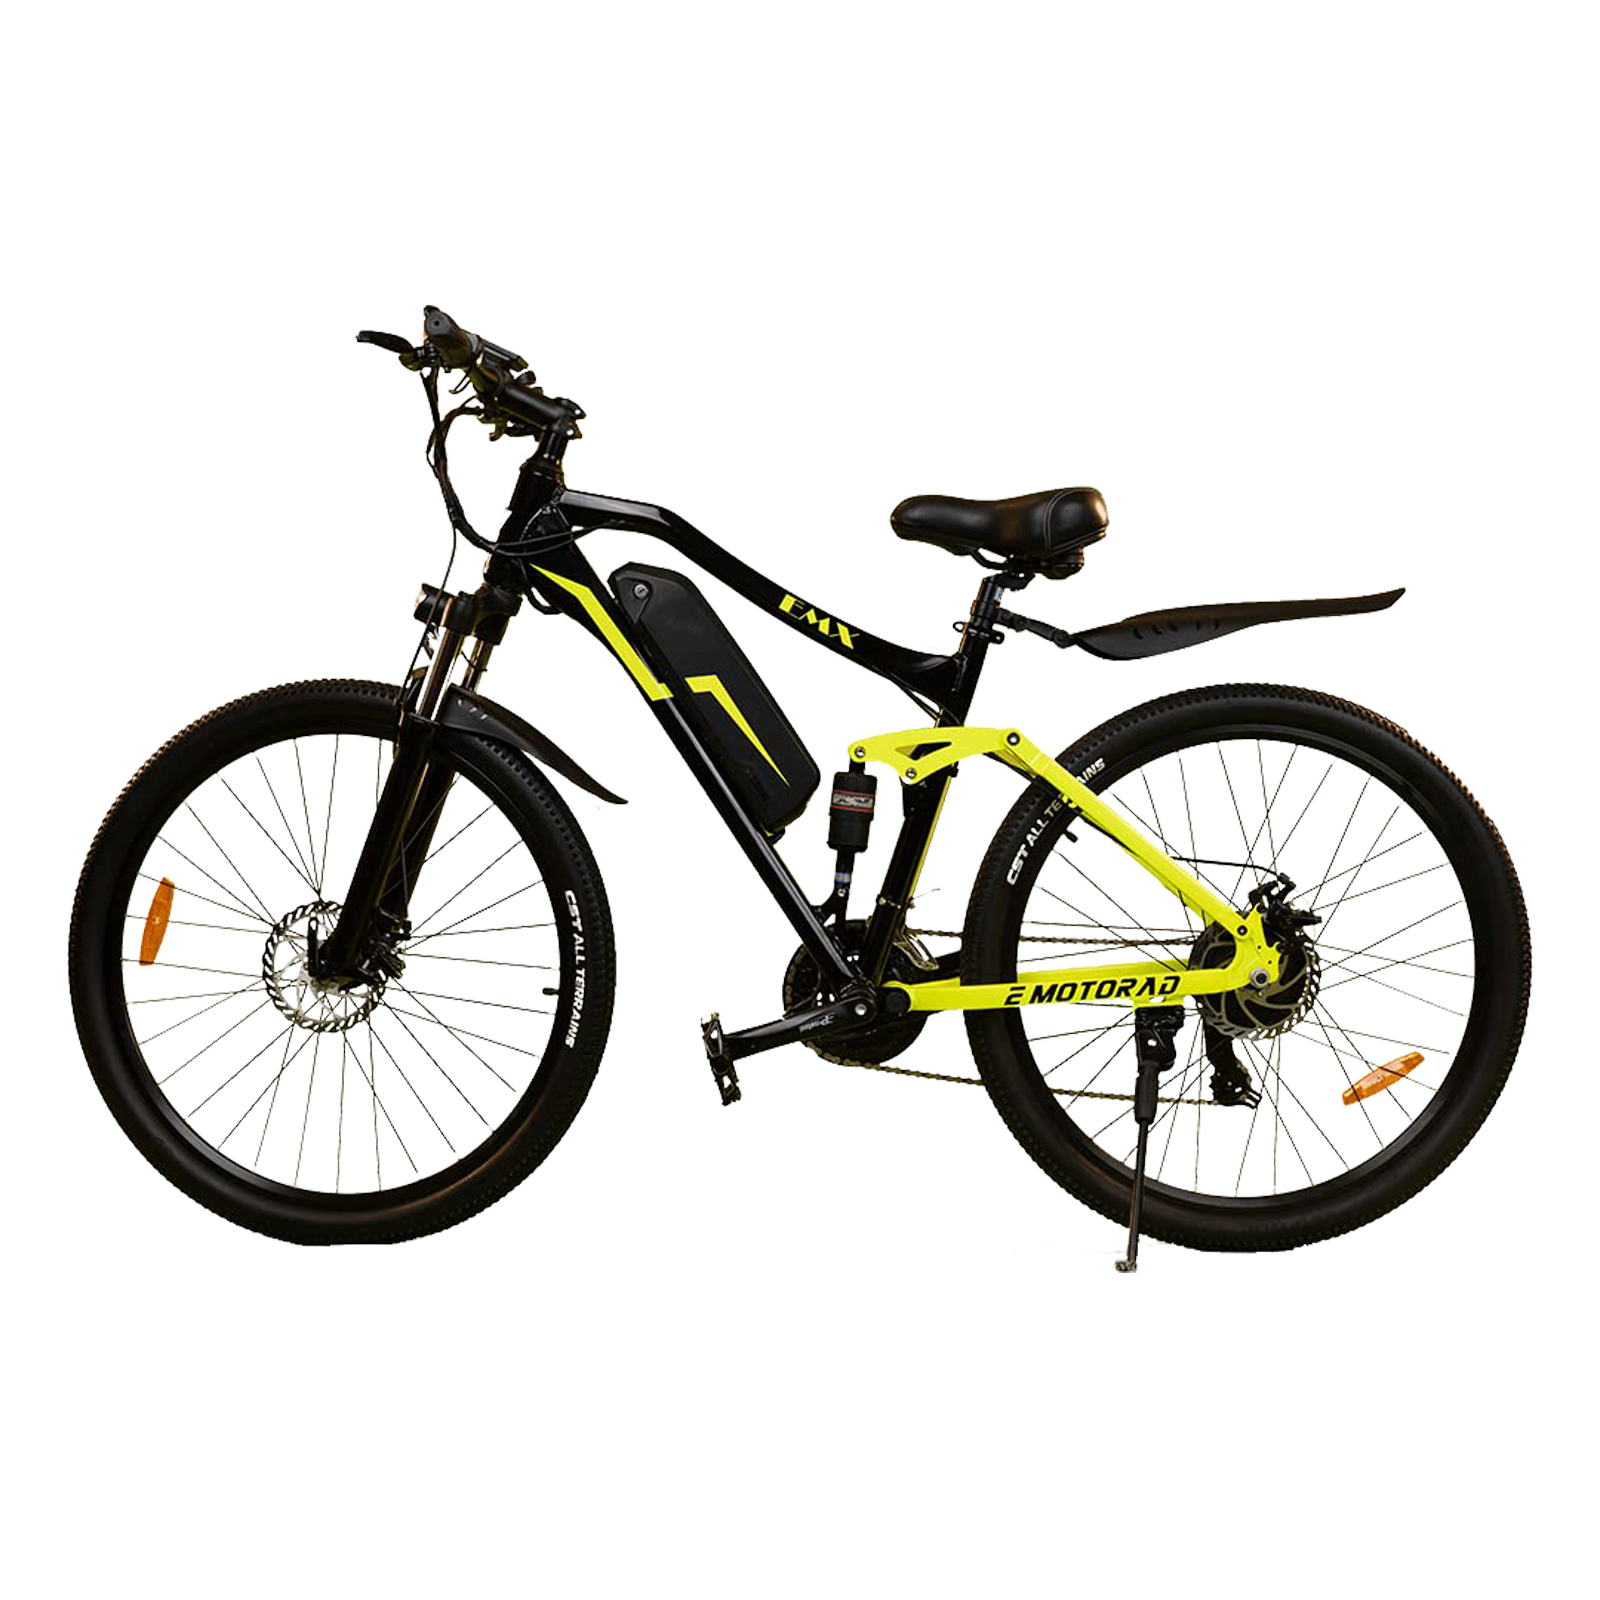 Buy Emotorad EMX Electric Cycle (25Kmph, M042, Multicolor) Online Croma